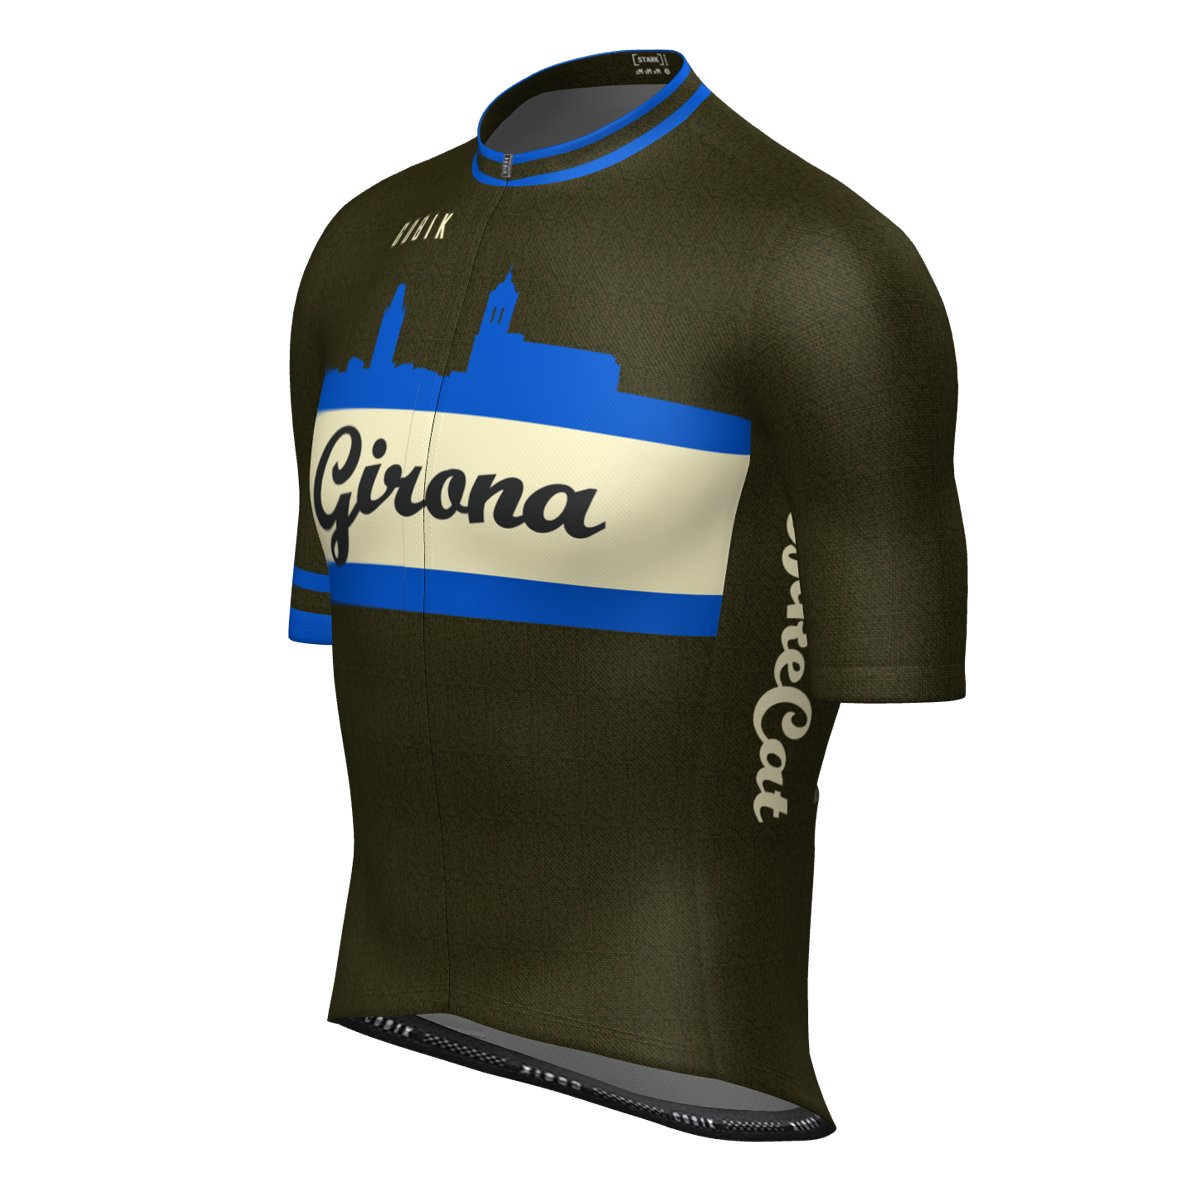 Girona vintage jersey - Olive/blue - side